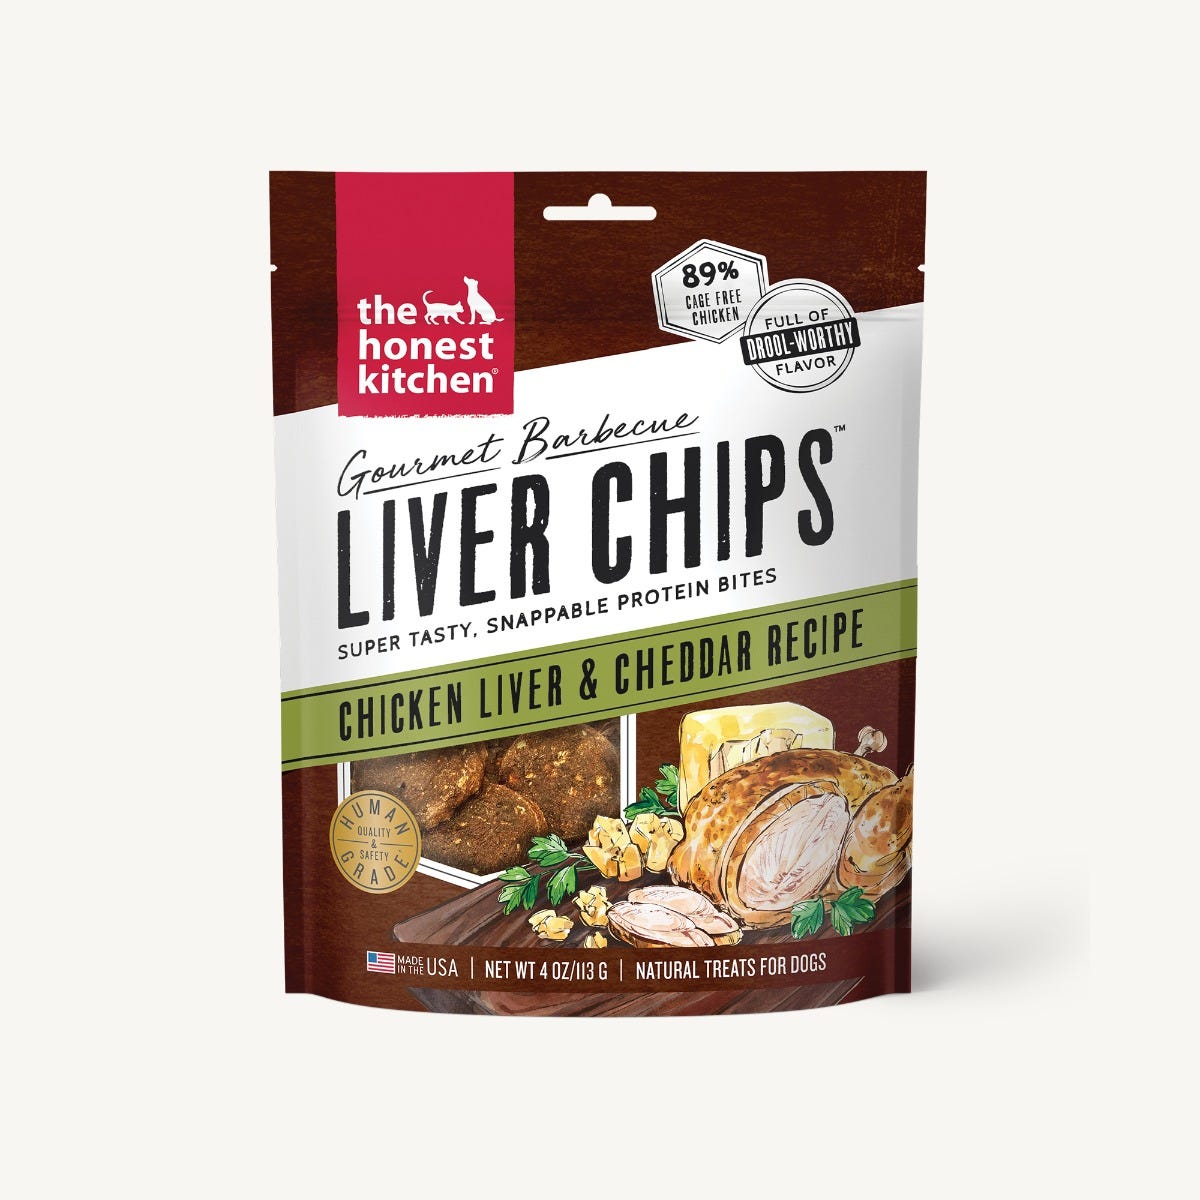 The Honest Kitchen Gourmet Barbecue Liver Chips - Chicken Liver & Cheddar, 4 oz